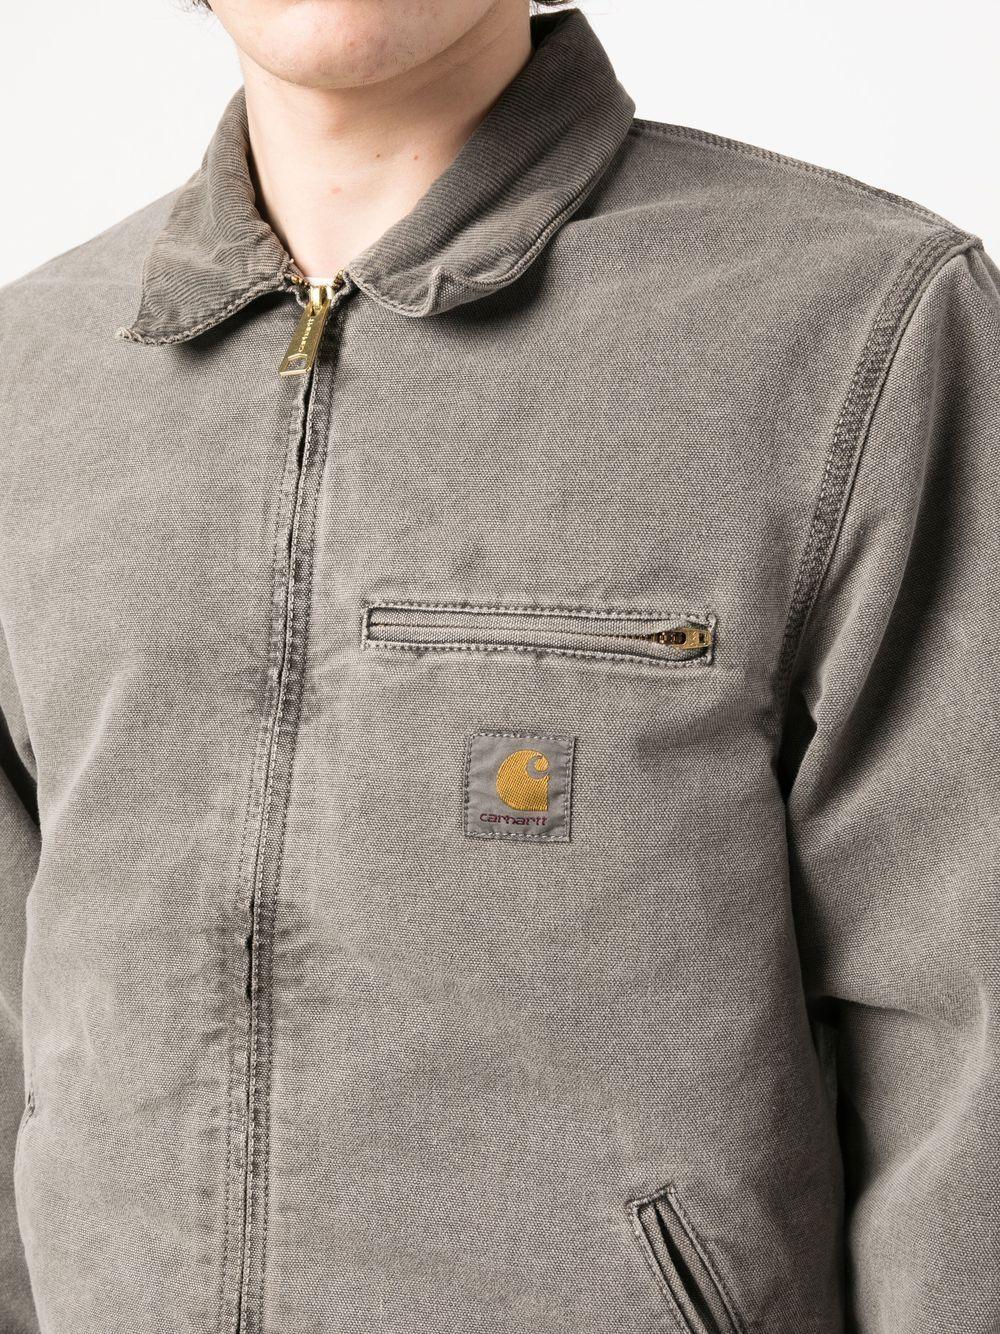 Carhartt WIP Detroit Organic Cotton Jacket in Gray for Men | Lyst